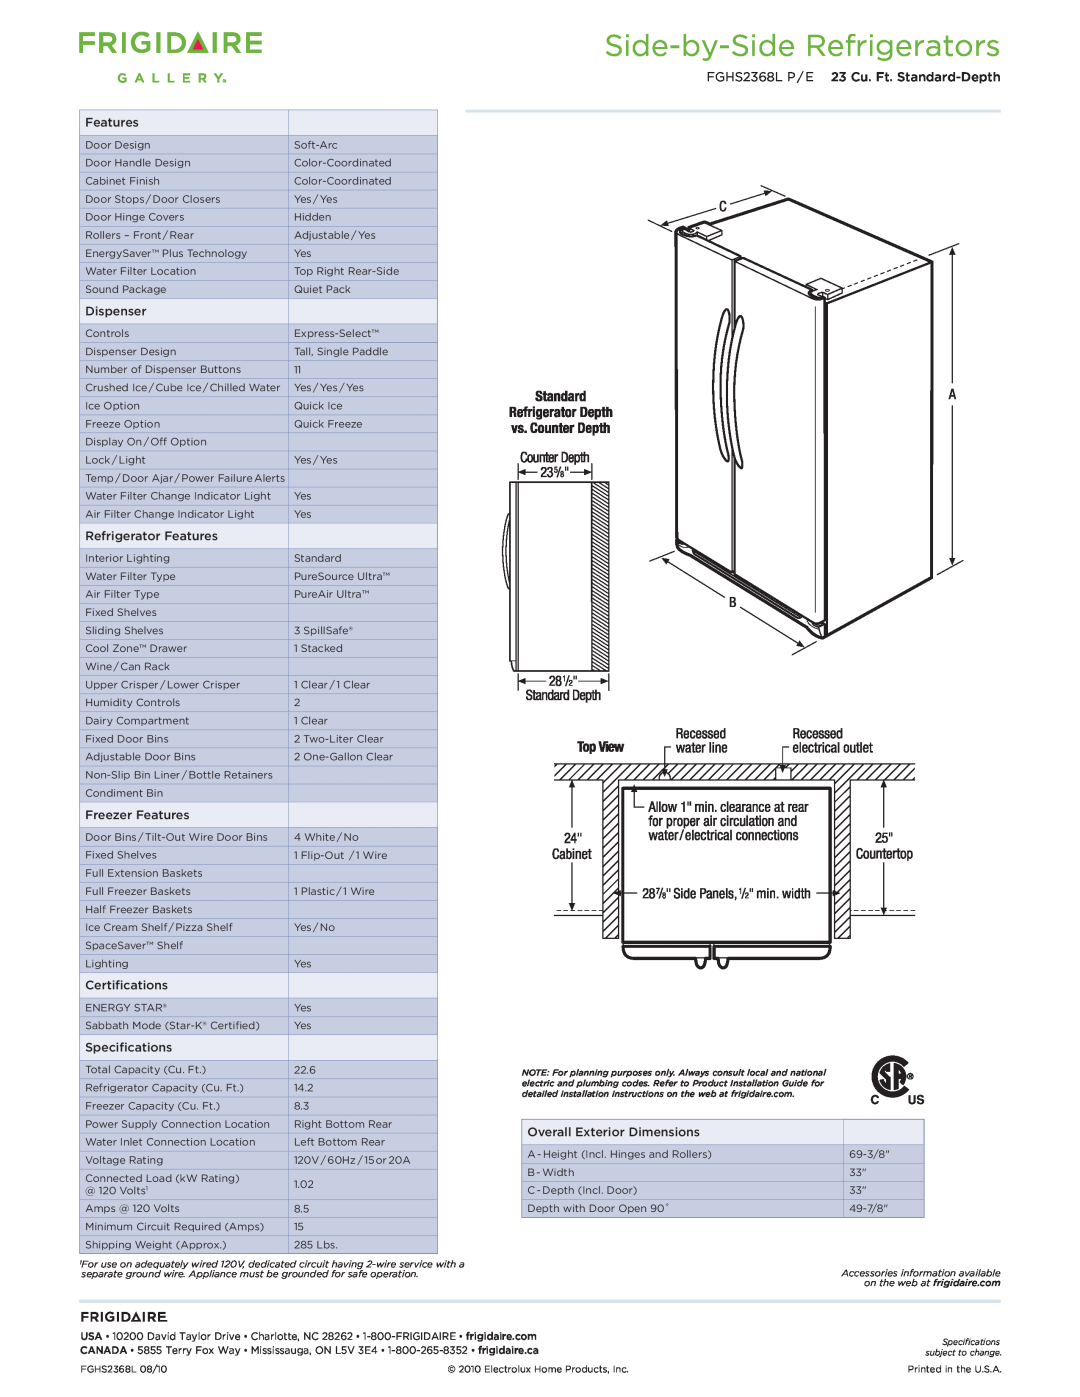 Frigidaire dimensions Side-by-SideRefrigerators, FGHS2368L P / E 23 Cu. Ft. Standard-Depth 